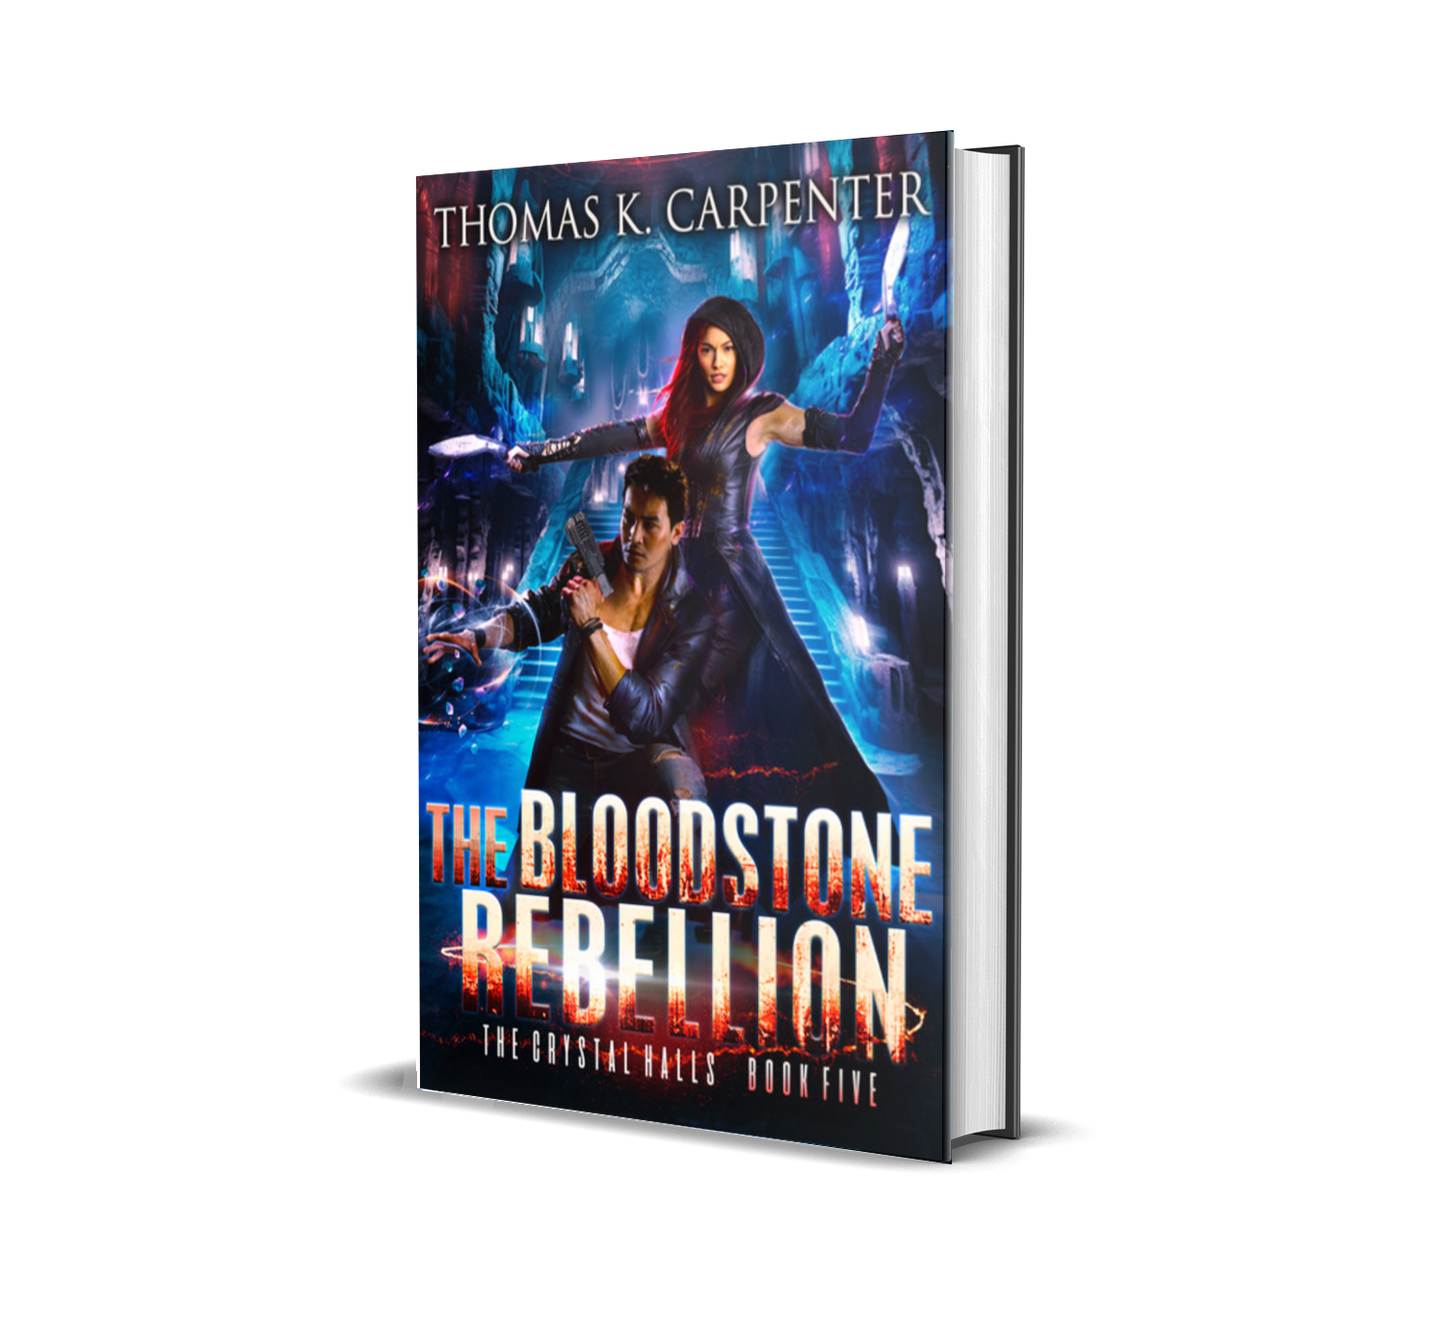 The Bloodstone Rebellion